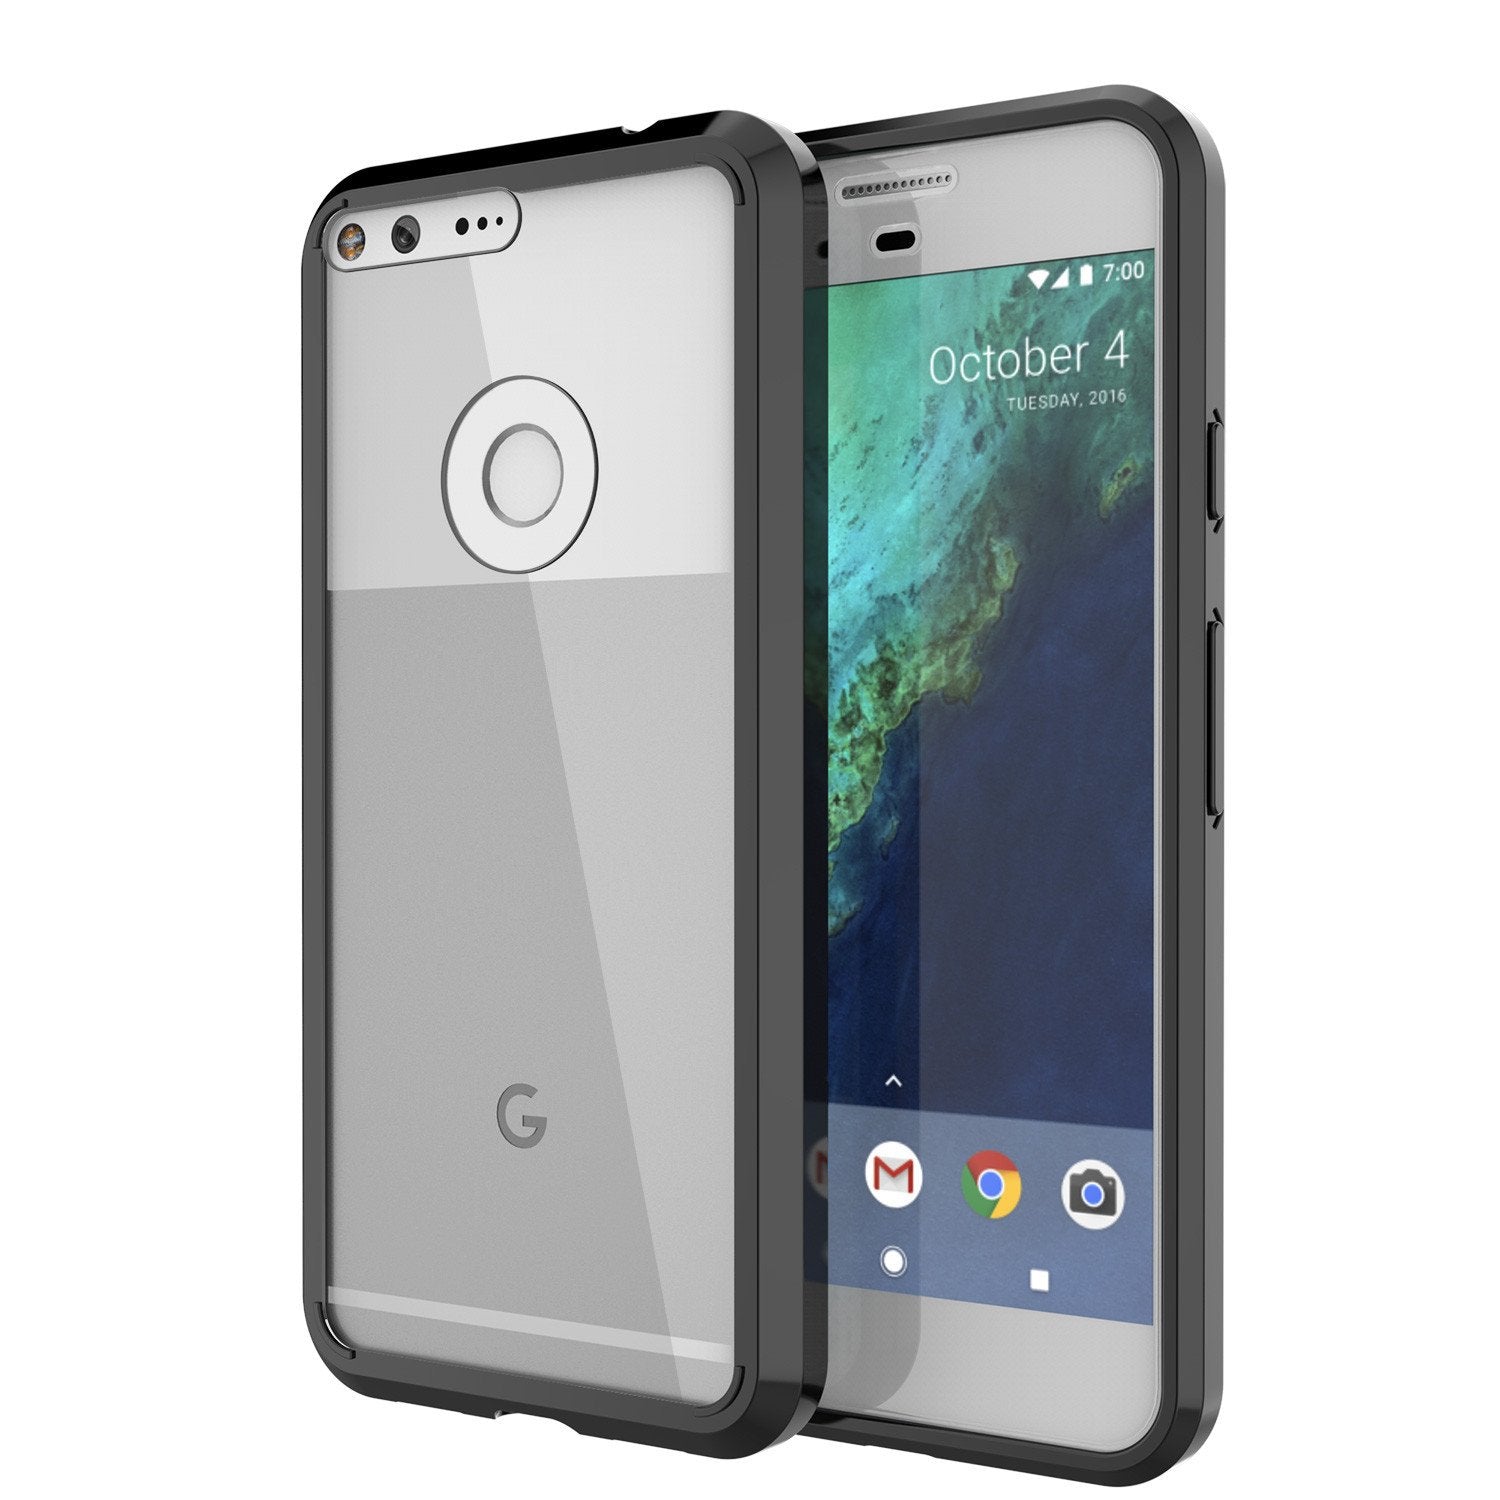 Google Pixel XL Case Punkcase® LUCID 2.0 Black Series w/ PUNK SHIELD Glass Screen Protector | Ultra Fit - PunkCase NZ